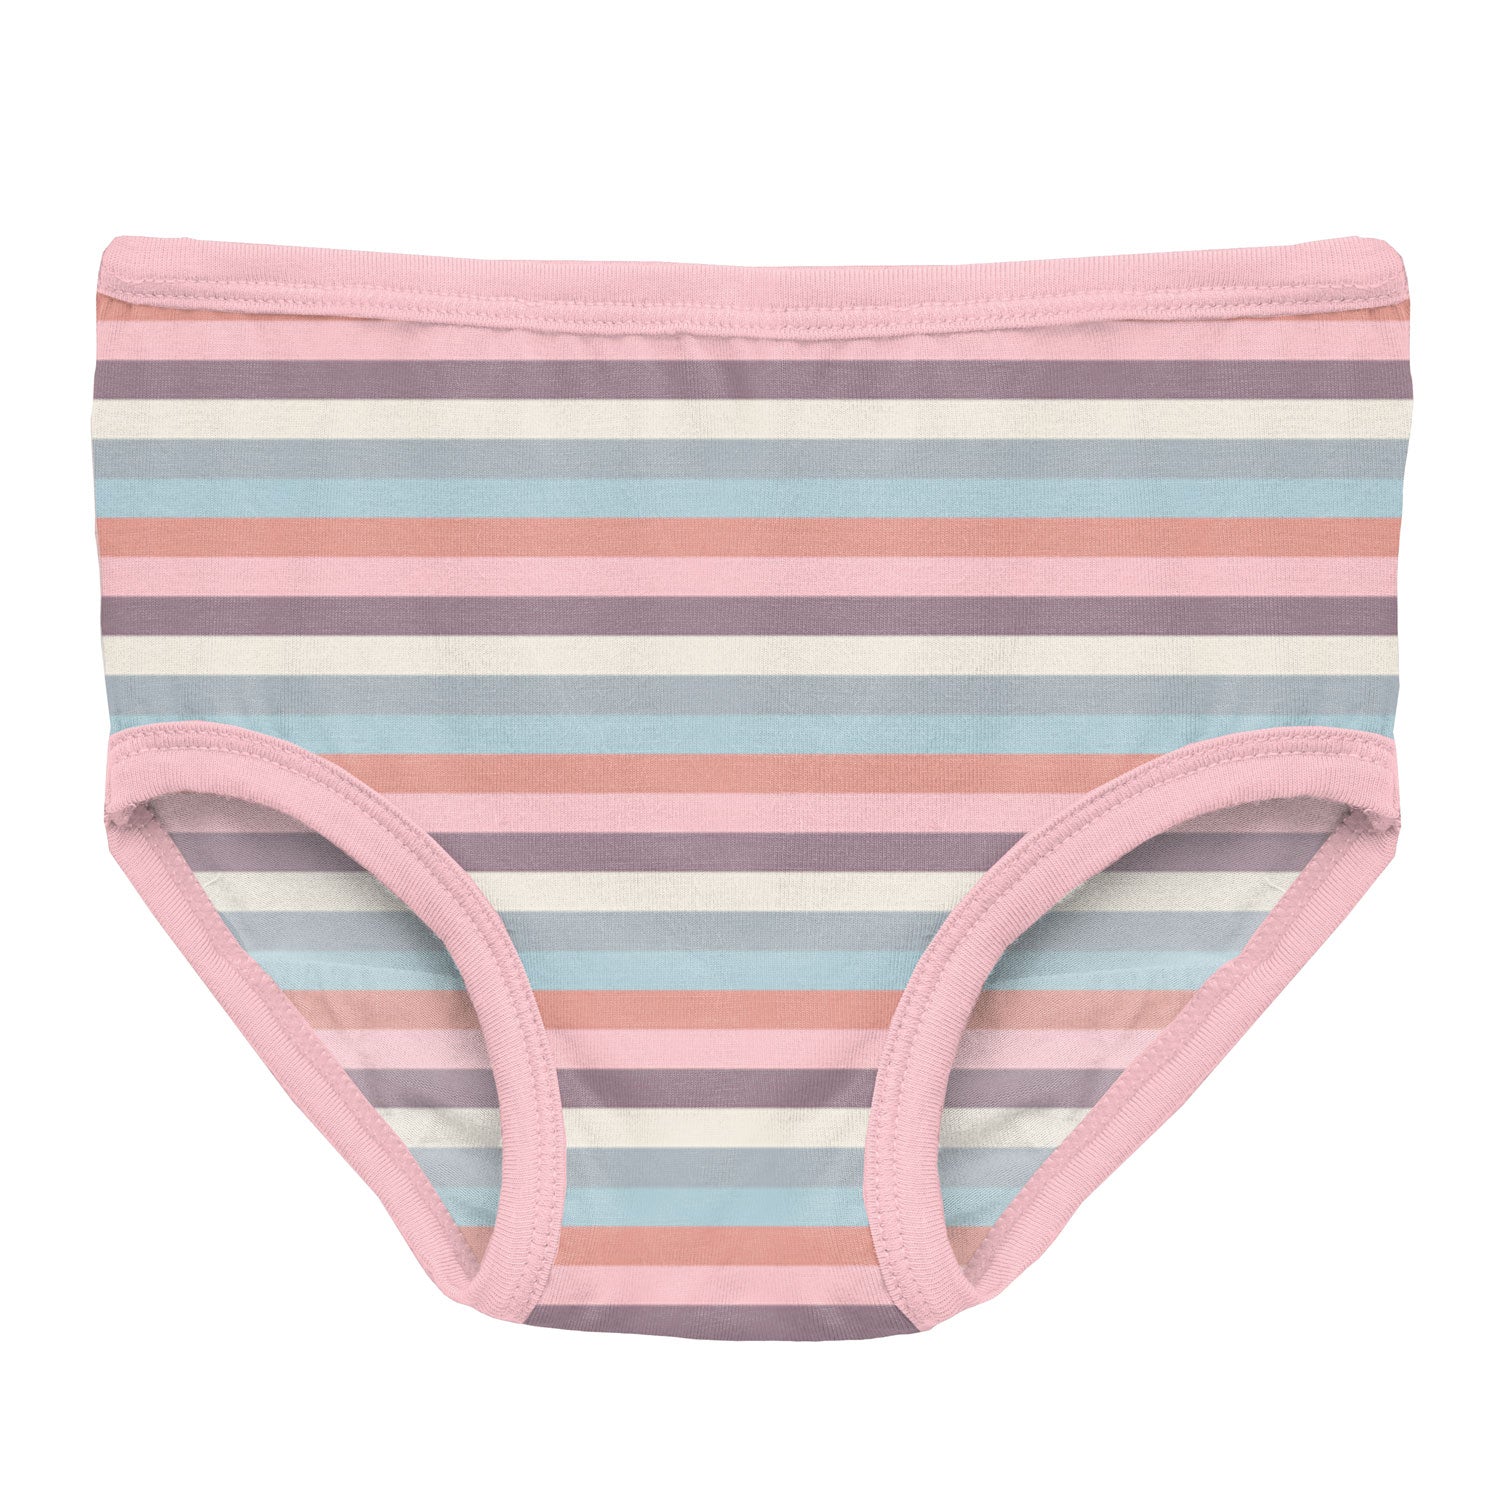 Kickee Pants Bamboo Girls Underwear - Spring Bloom Stripe